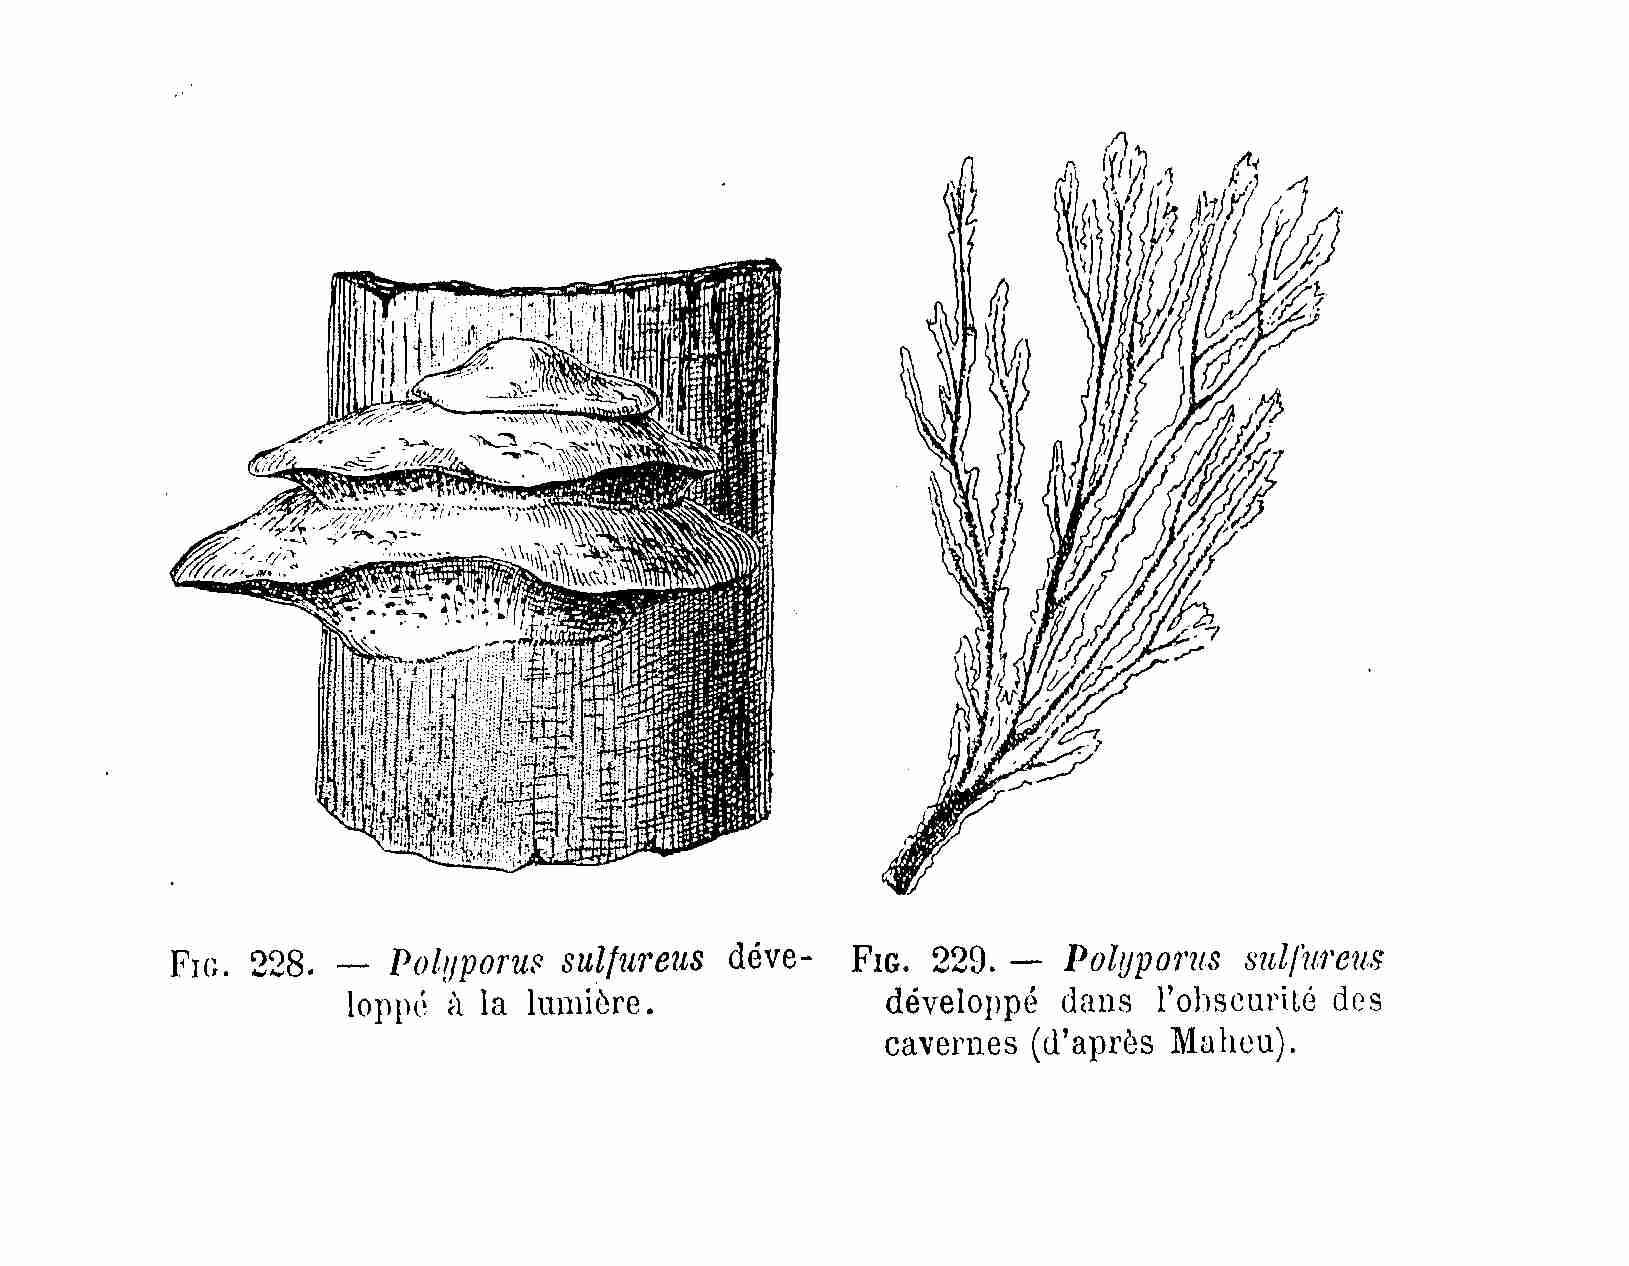 Image of Bracket Fungus